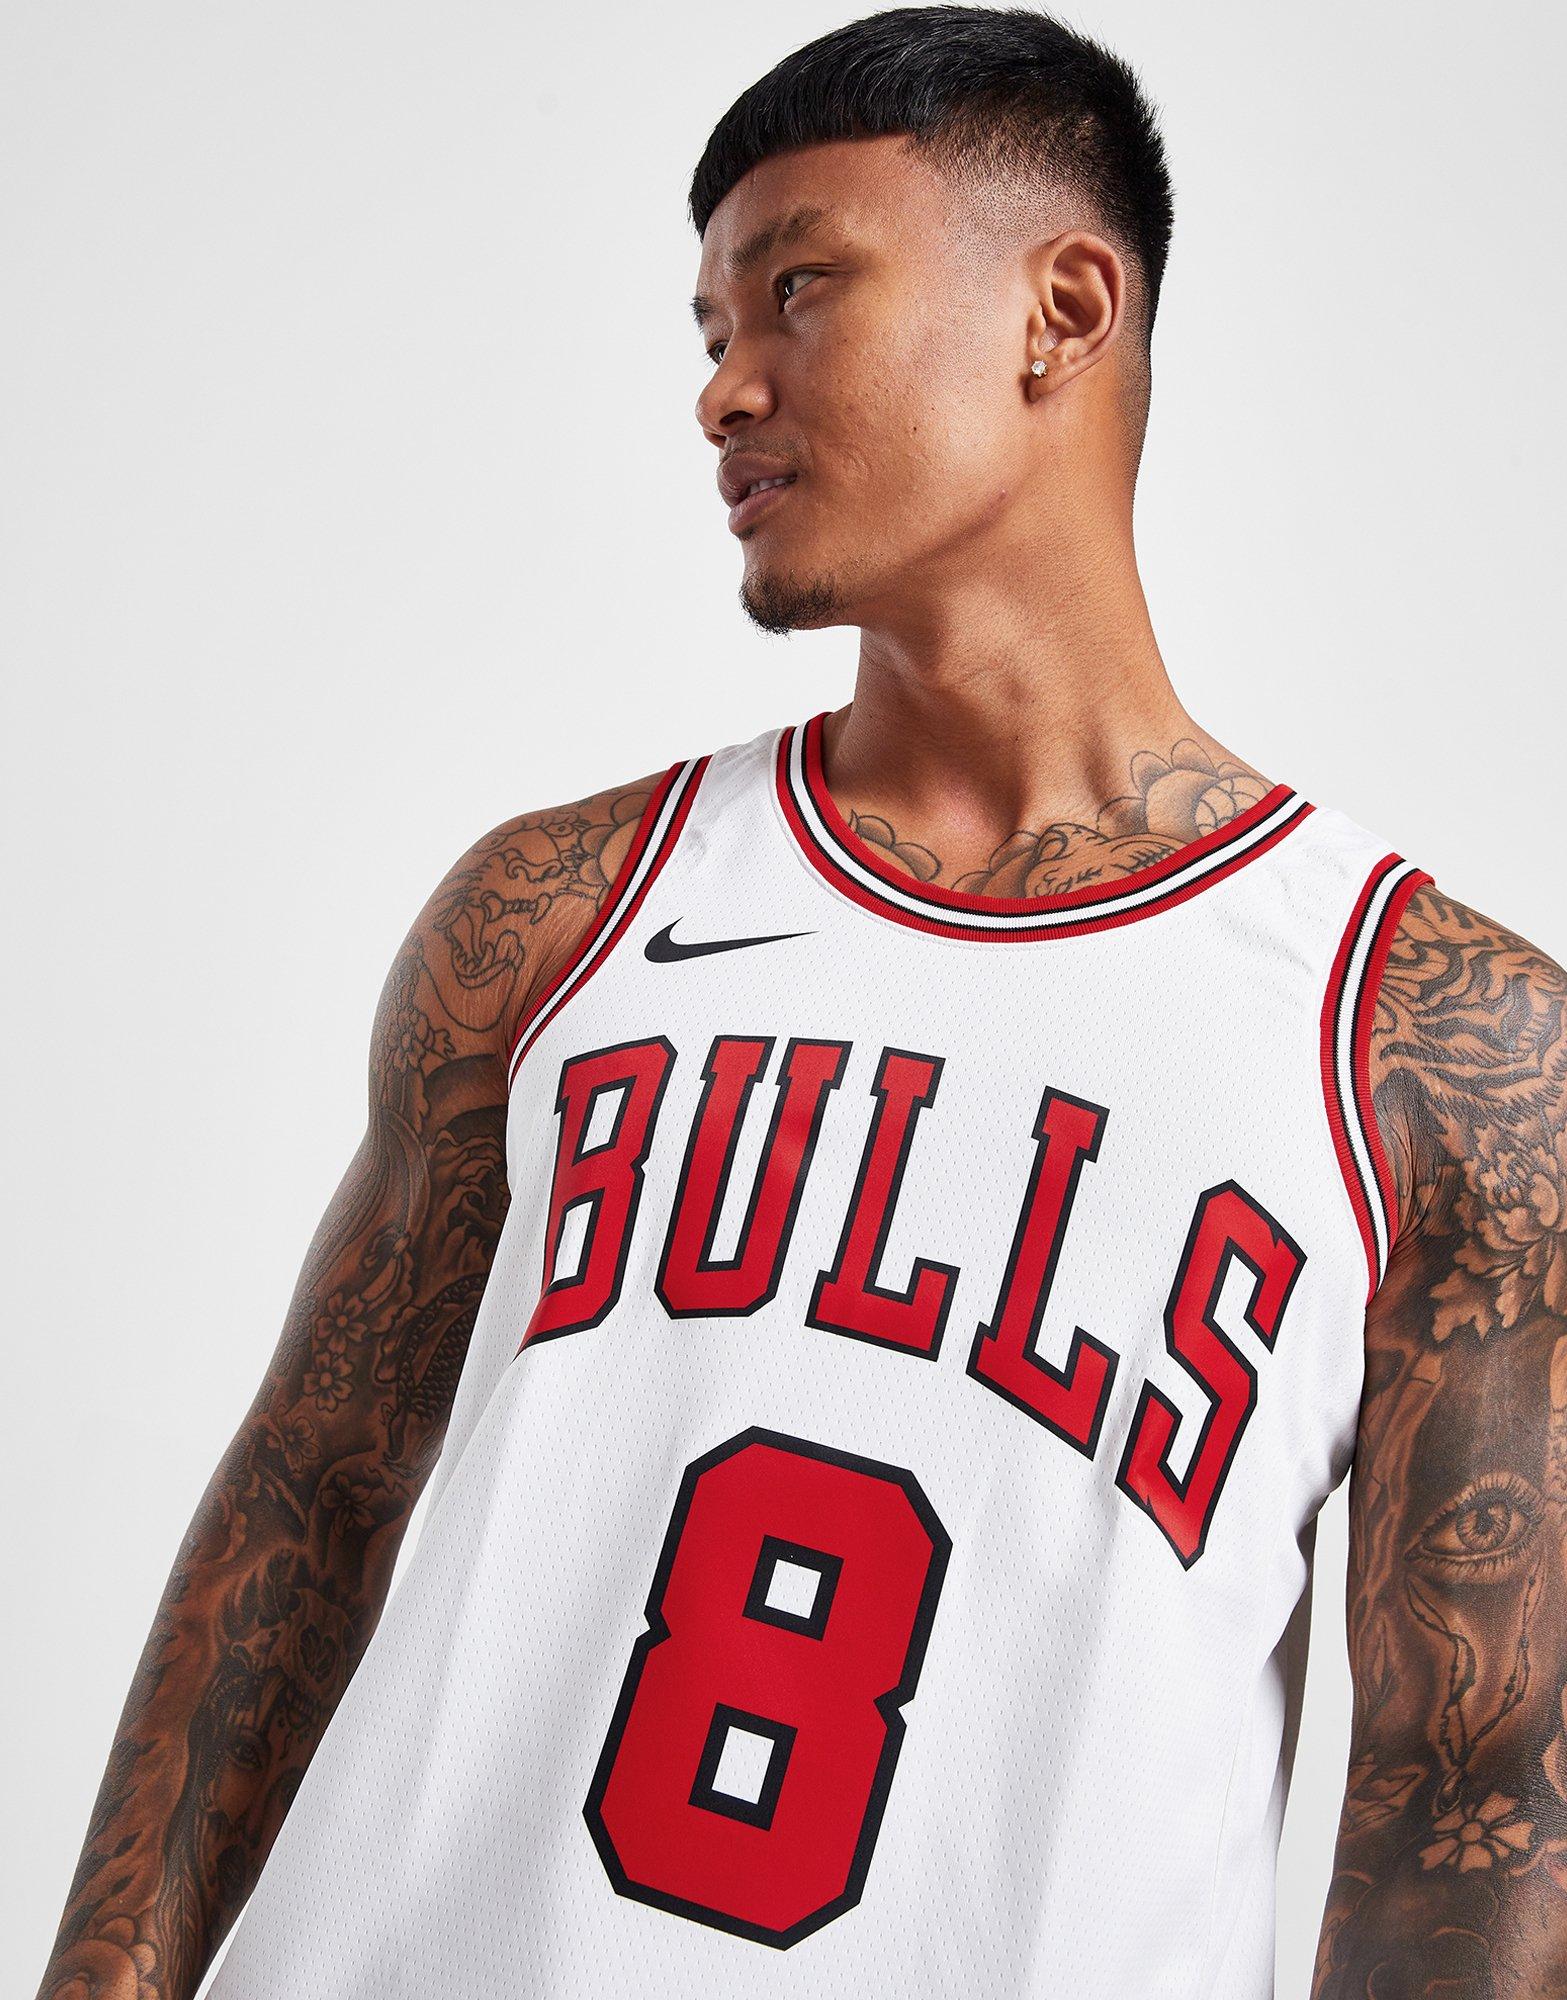 Red Nike NBA Chicago Bulls LaVine #8 Jersey Junior